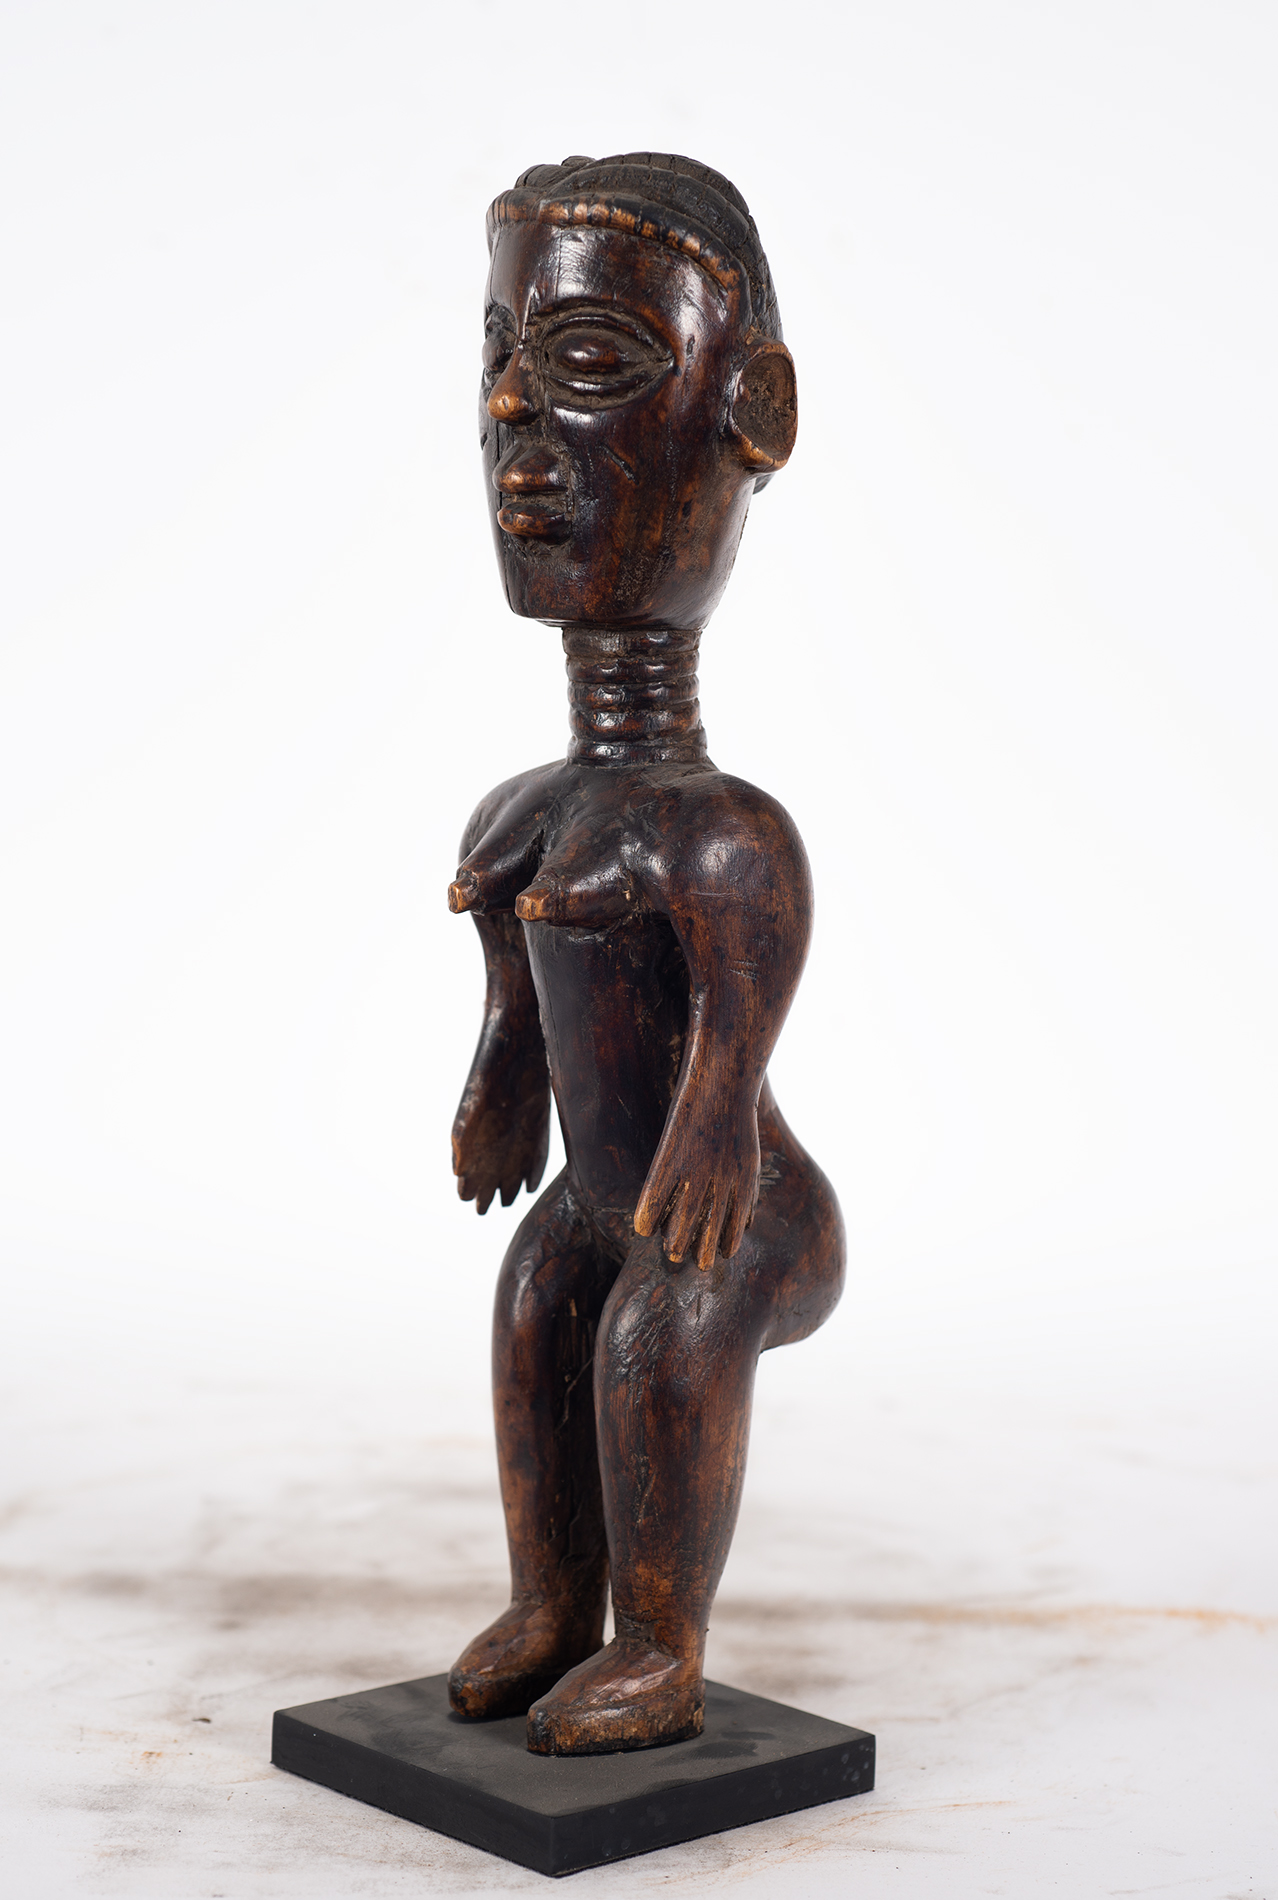 Guro Sculpture, Ivory Coast - Image 2 of 7